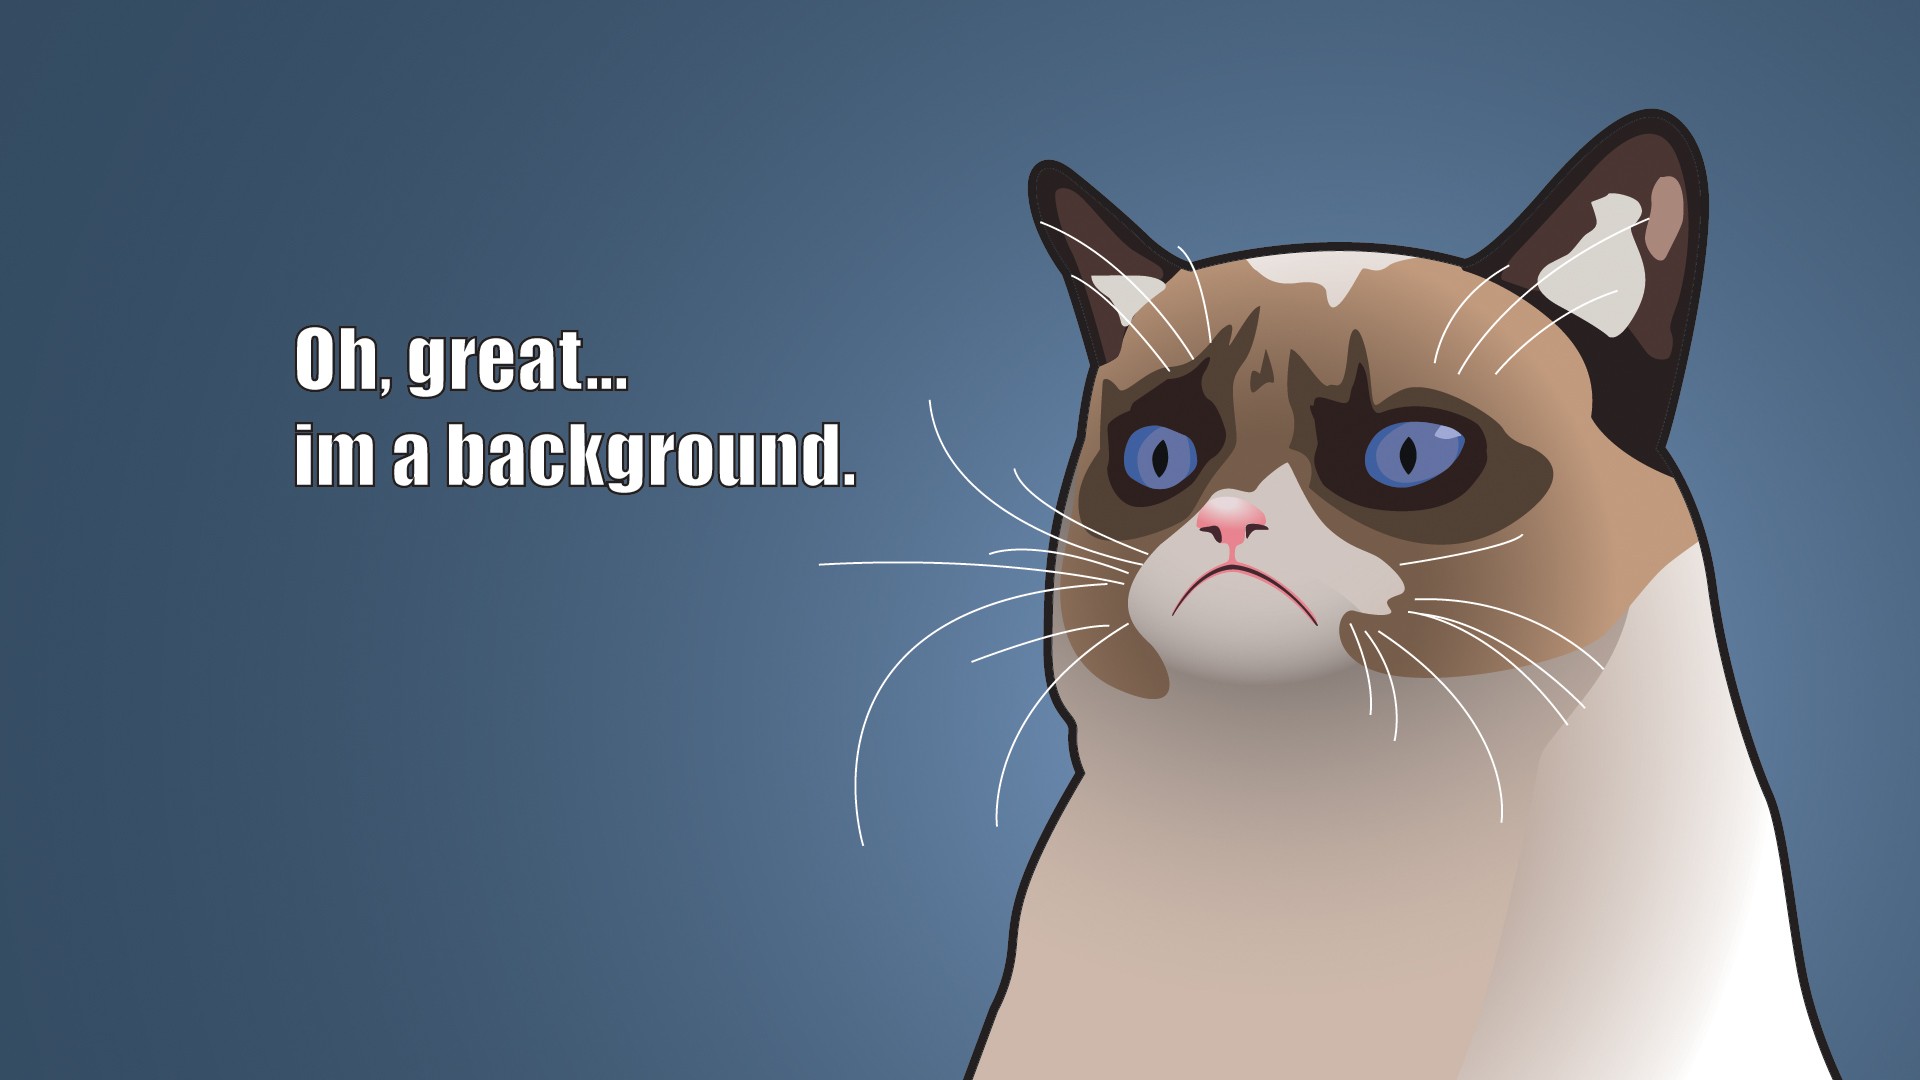 Grumpy Cat Meme Pictures humor funny cats r wallpaper 1920x1080 1920x1080